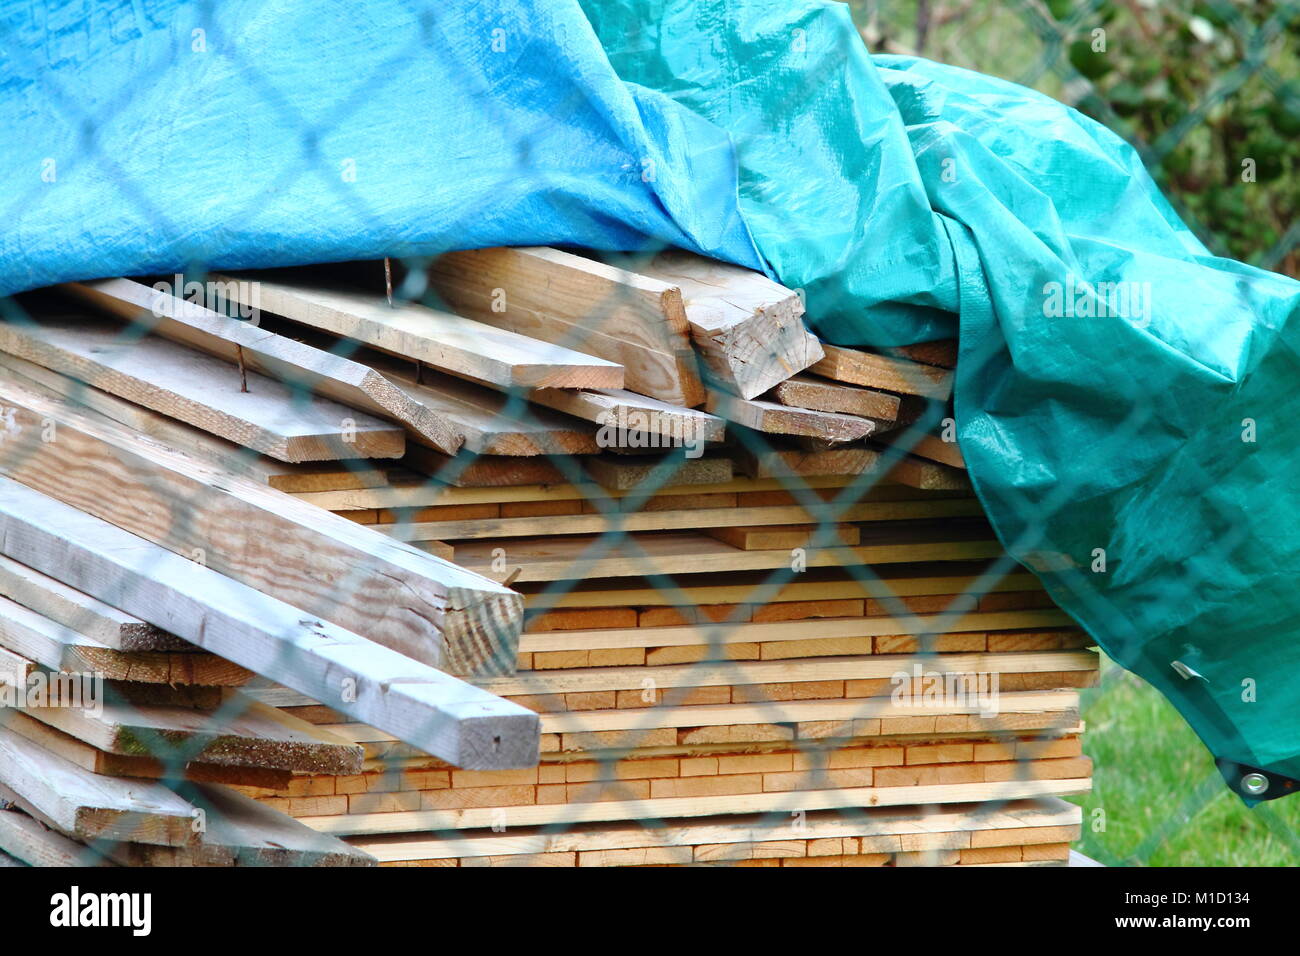 Construction site, piled wooden planks  under aqua blue tarpaulin. Stock Photo